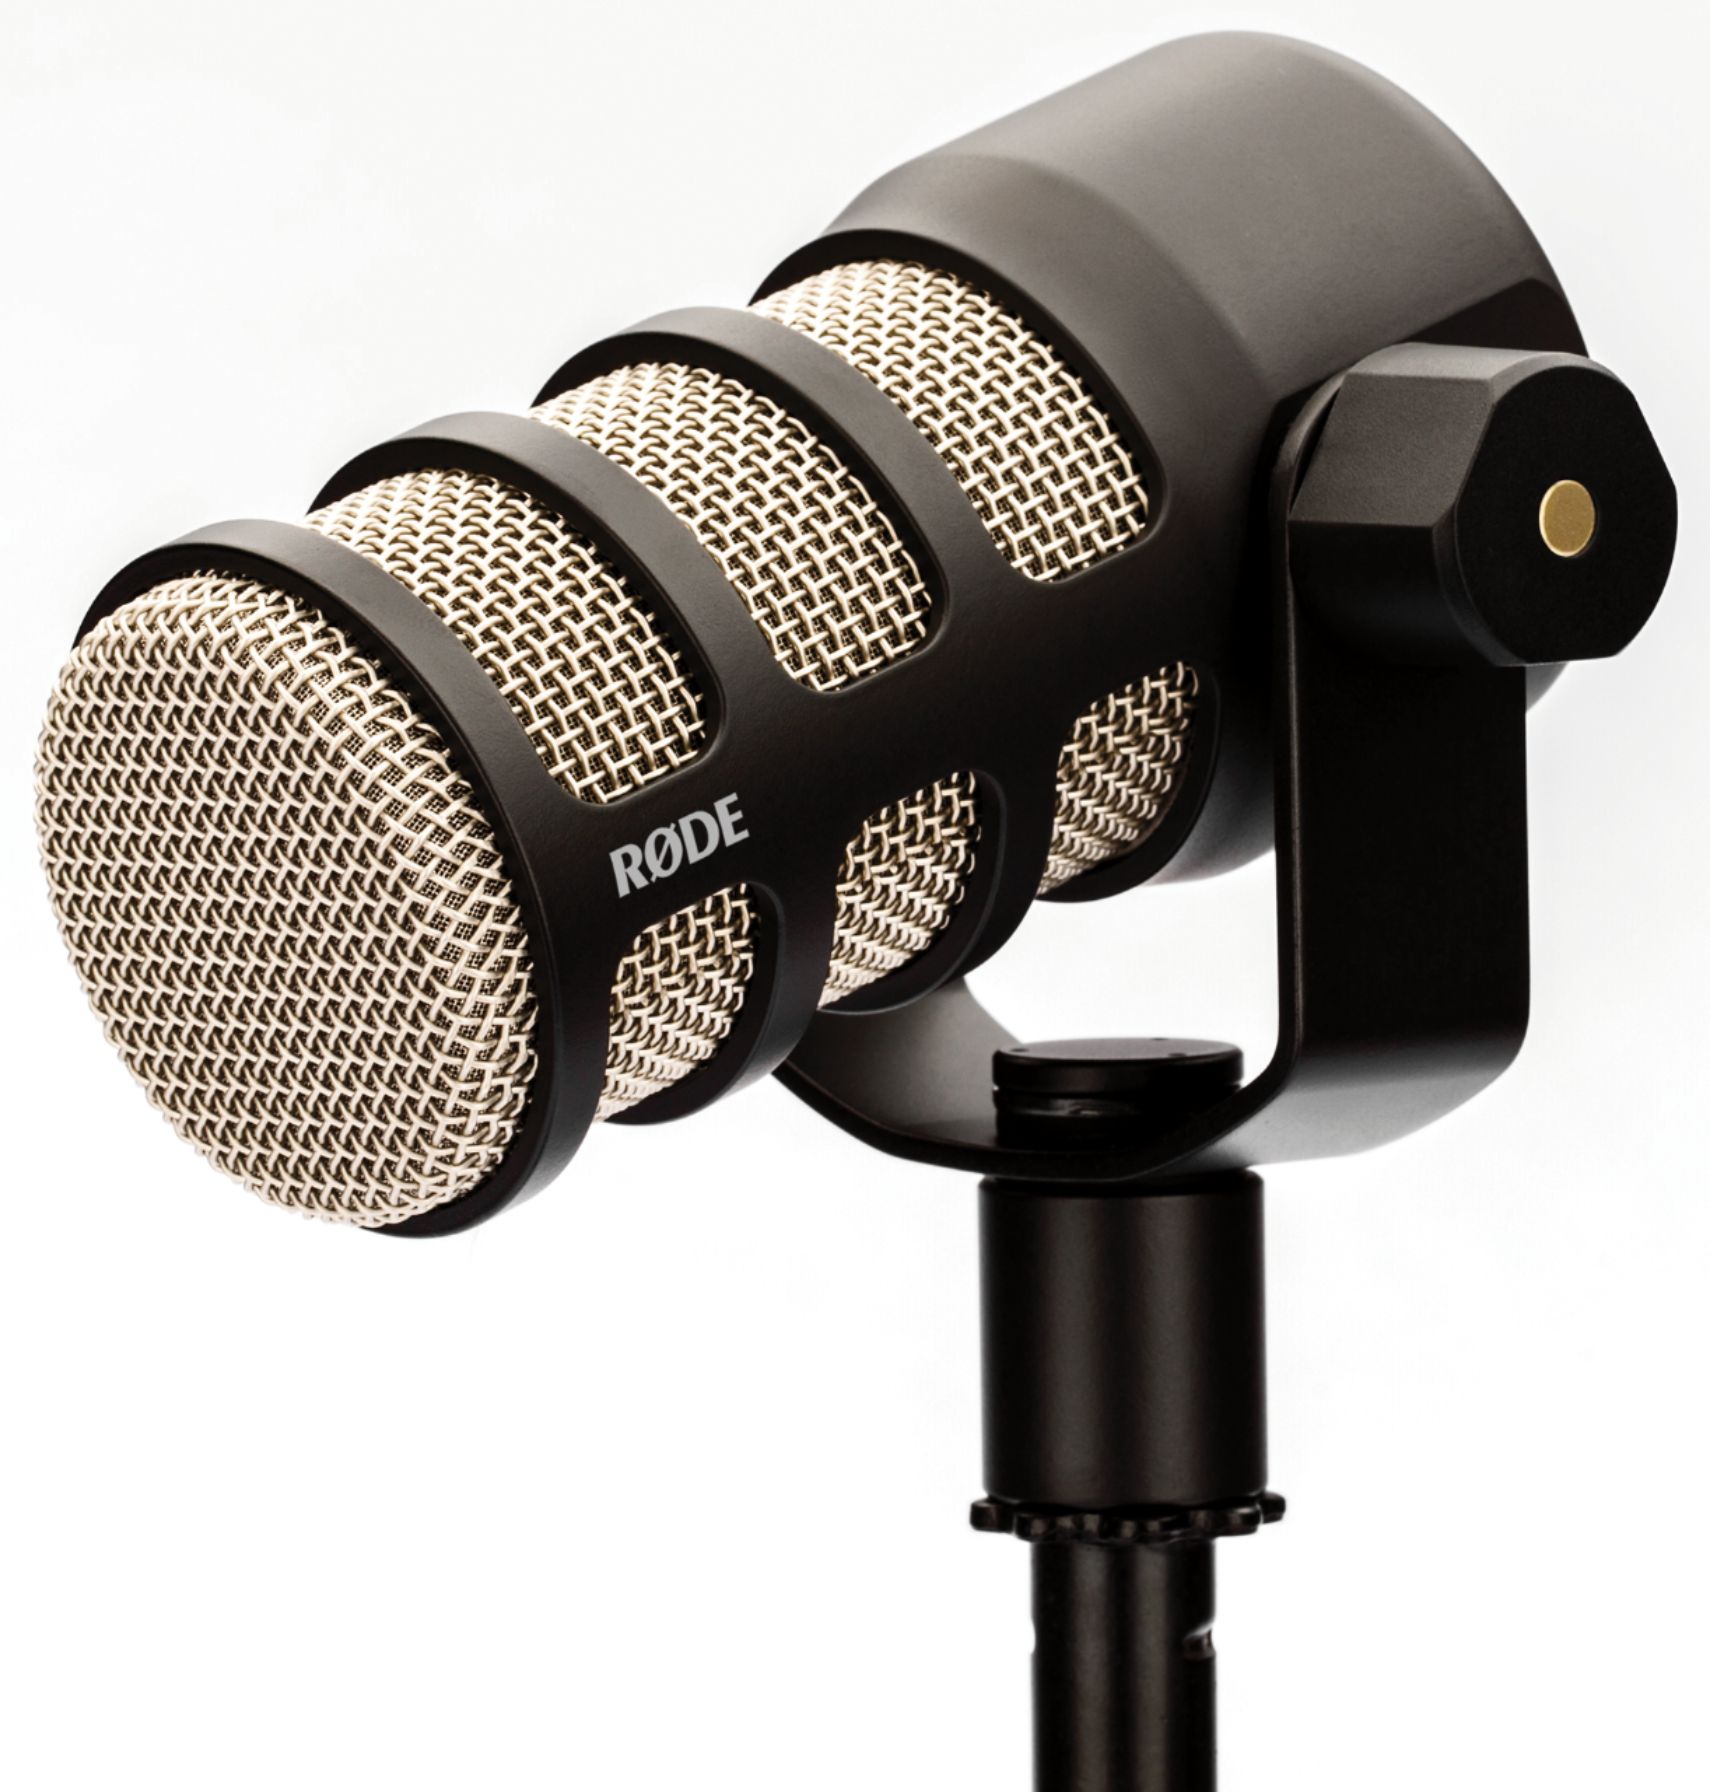 PodMic, Dynamic Broadcast Microphone